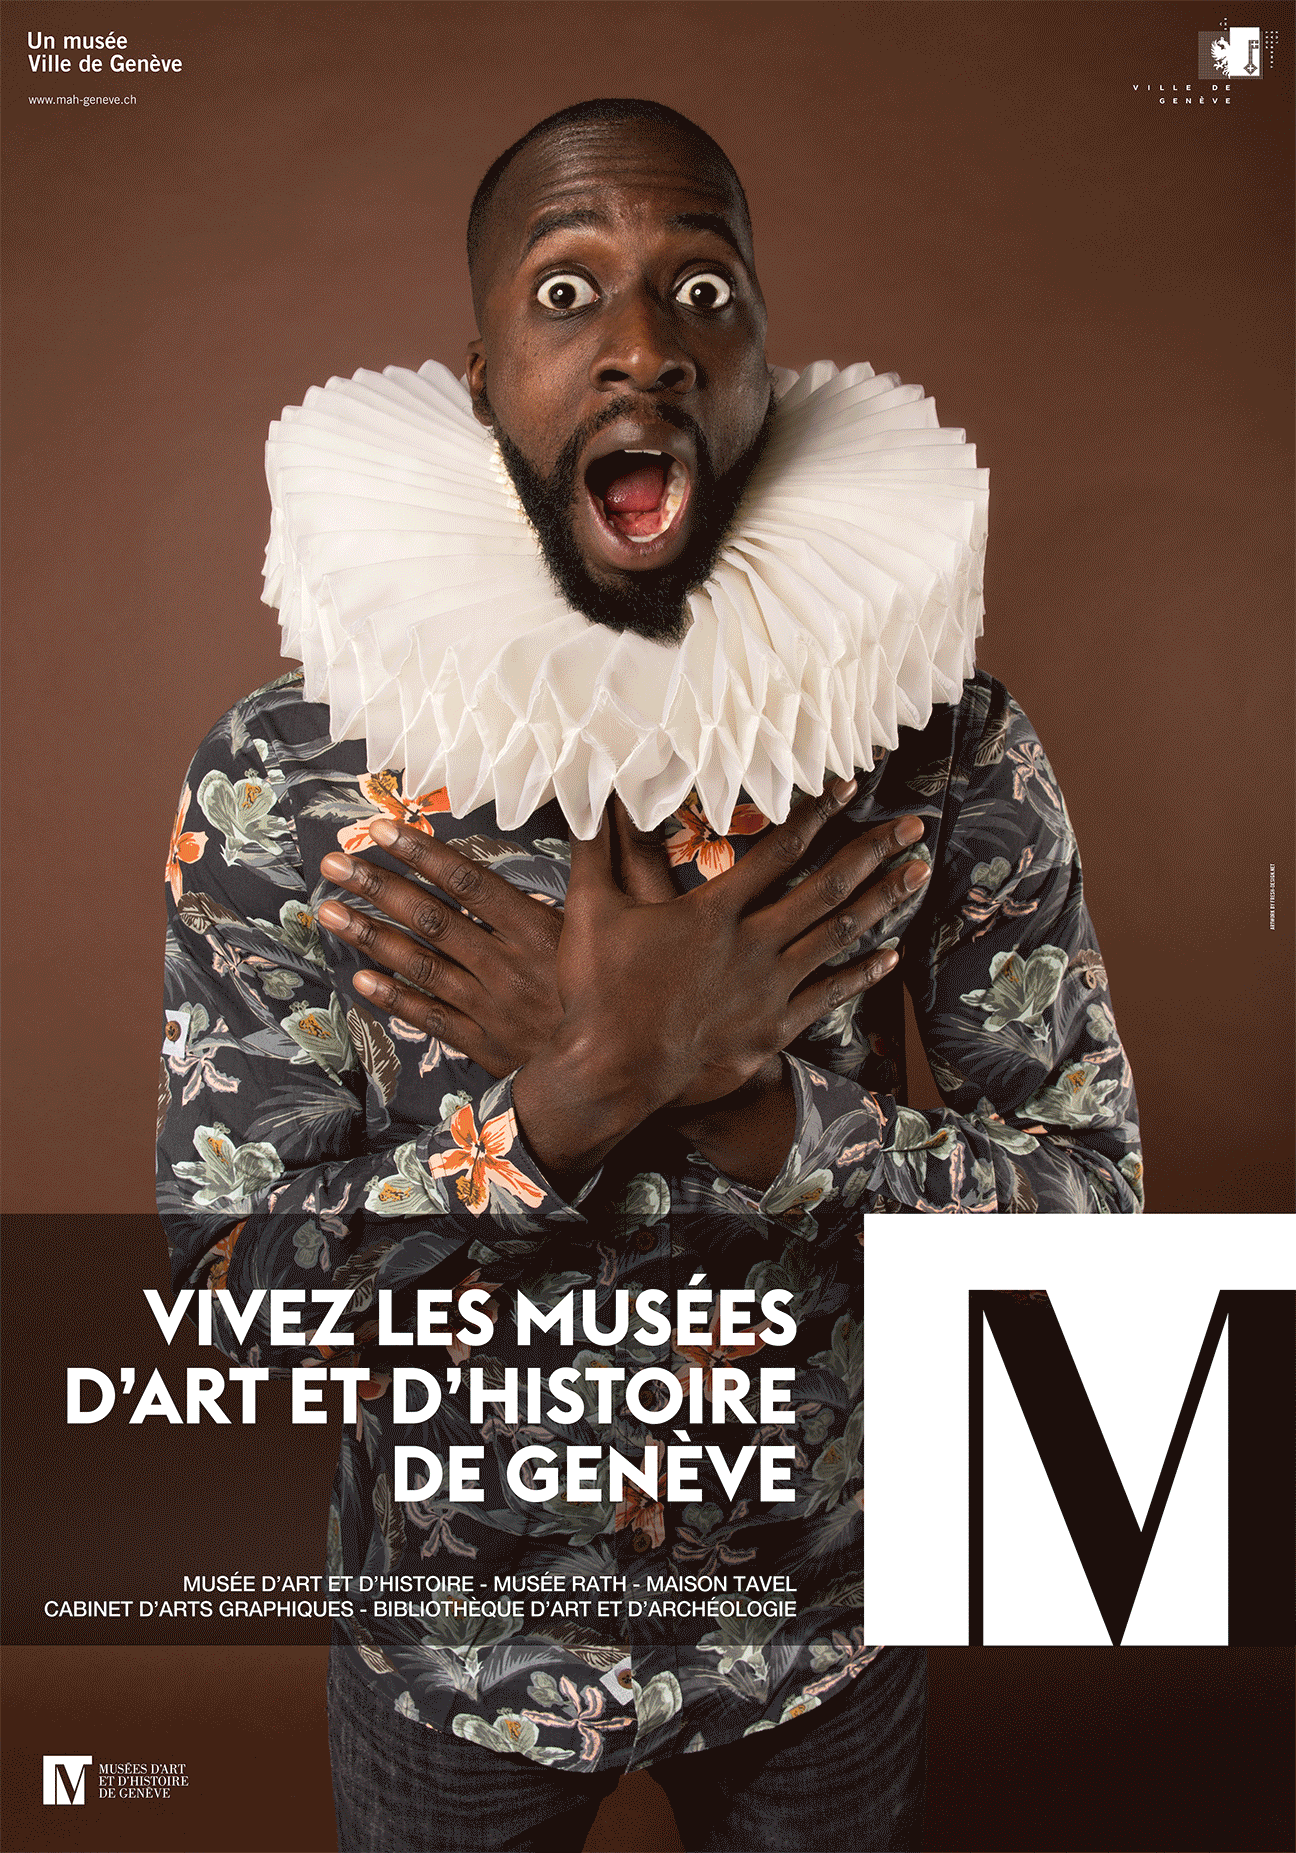 Fabien_cuffel_Musee-art-et-histoire-geneve_campagne-institutionnelle-2017